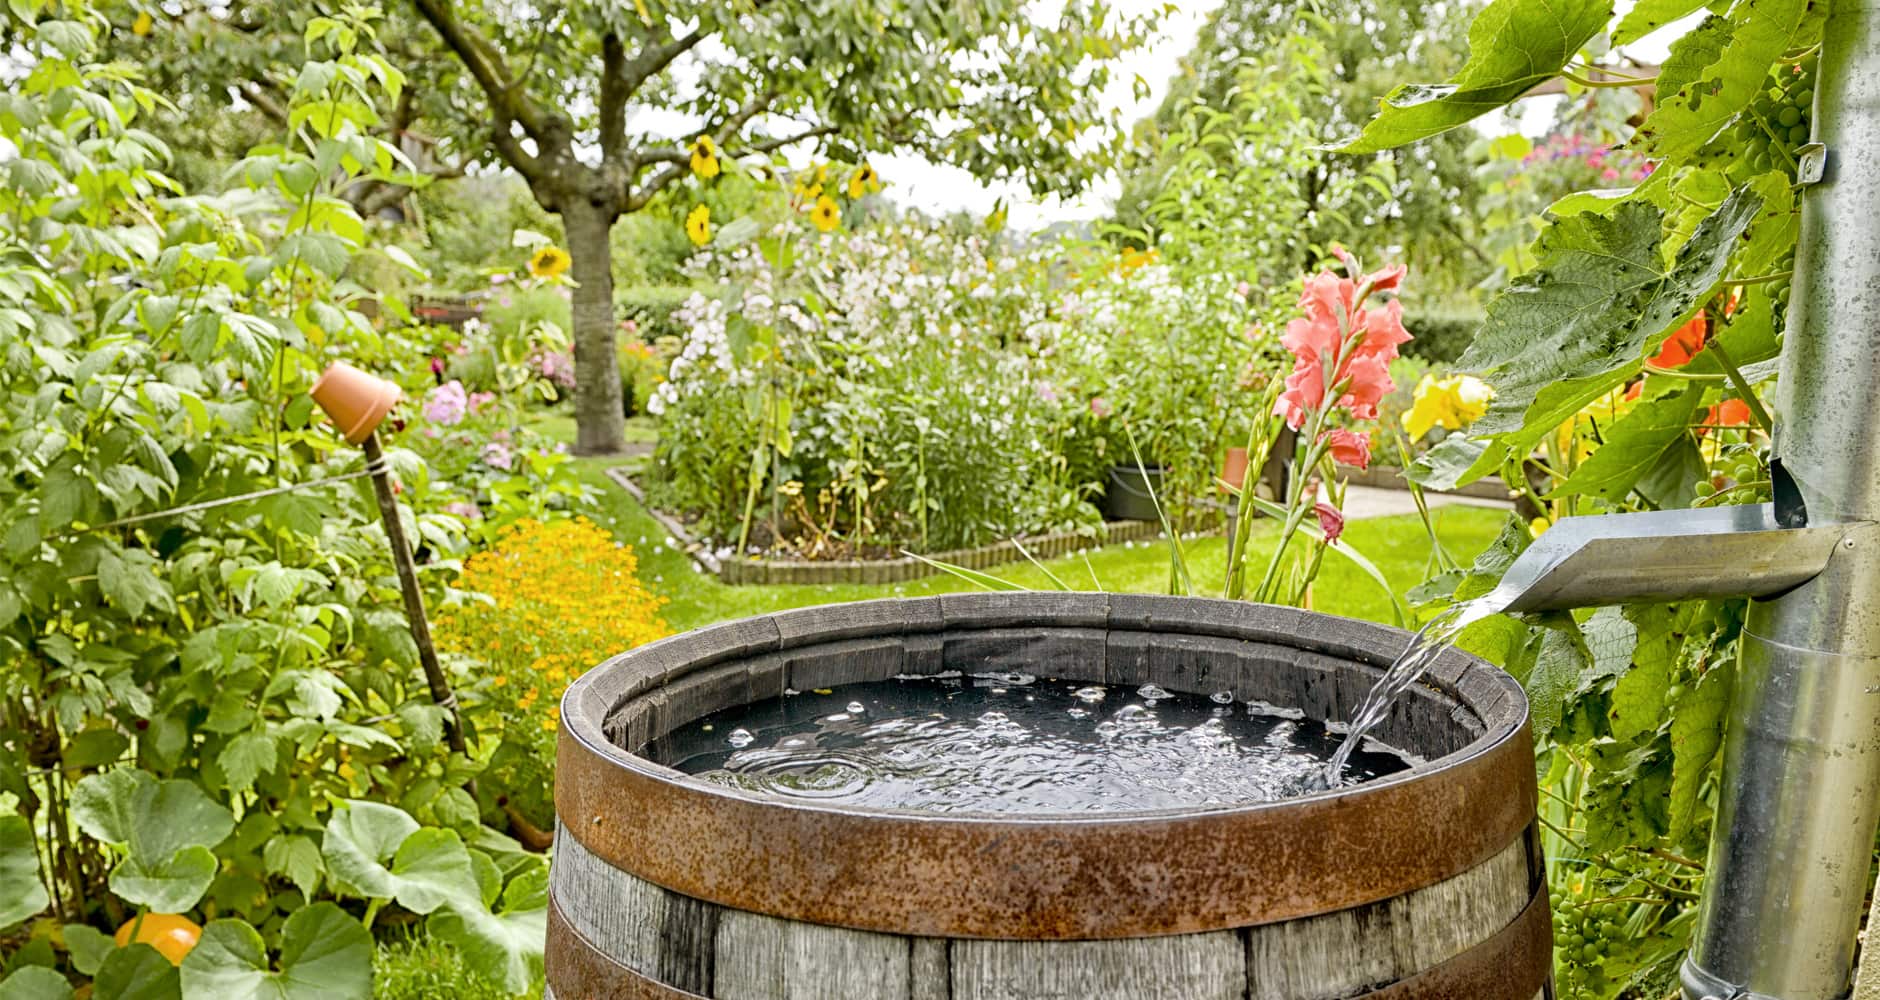 Tips on Adding a Rain Barrel to Your Garden